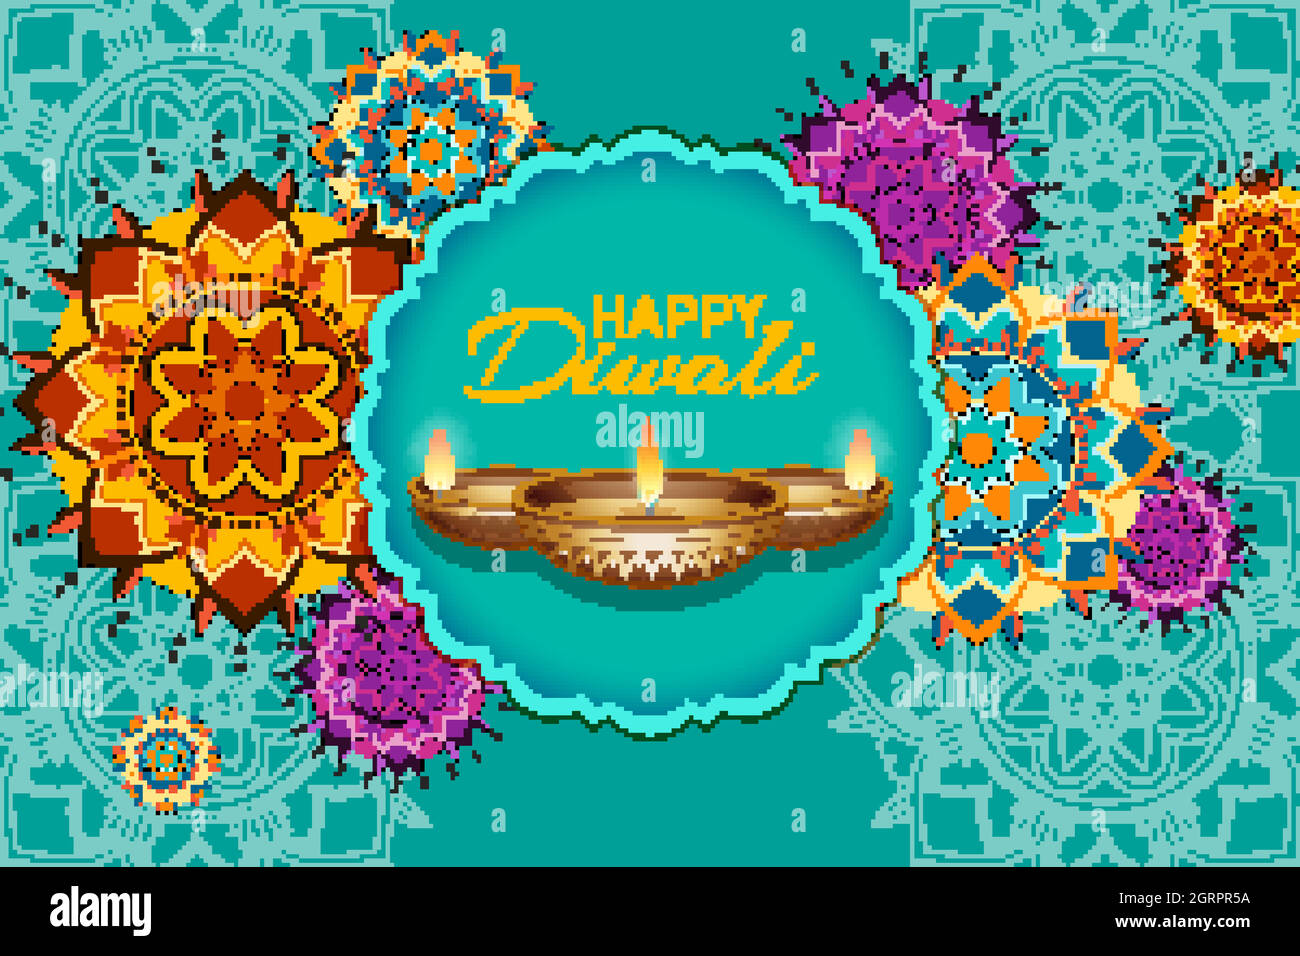 Diwali Background Images HD Pictures For Free Vectors Download   Lovepikcom